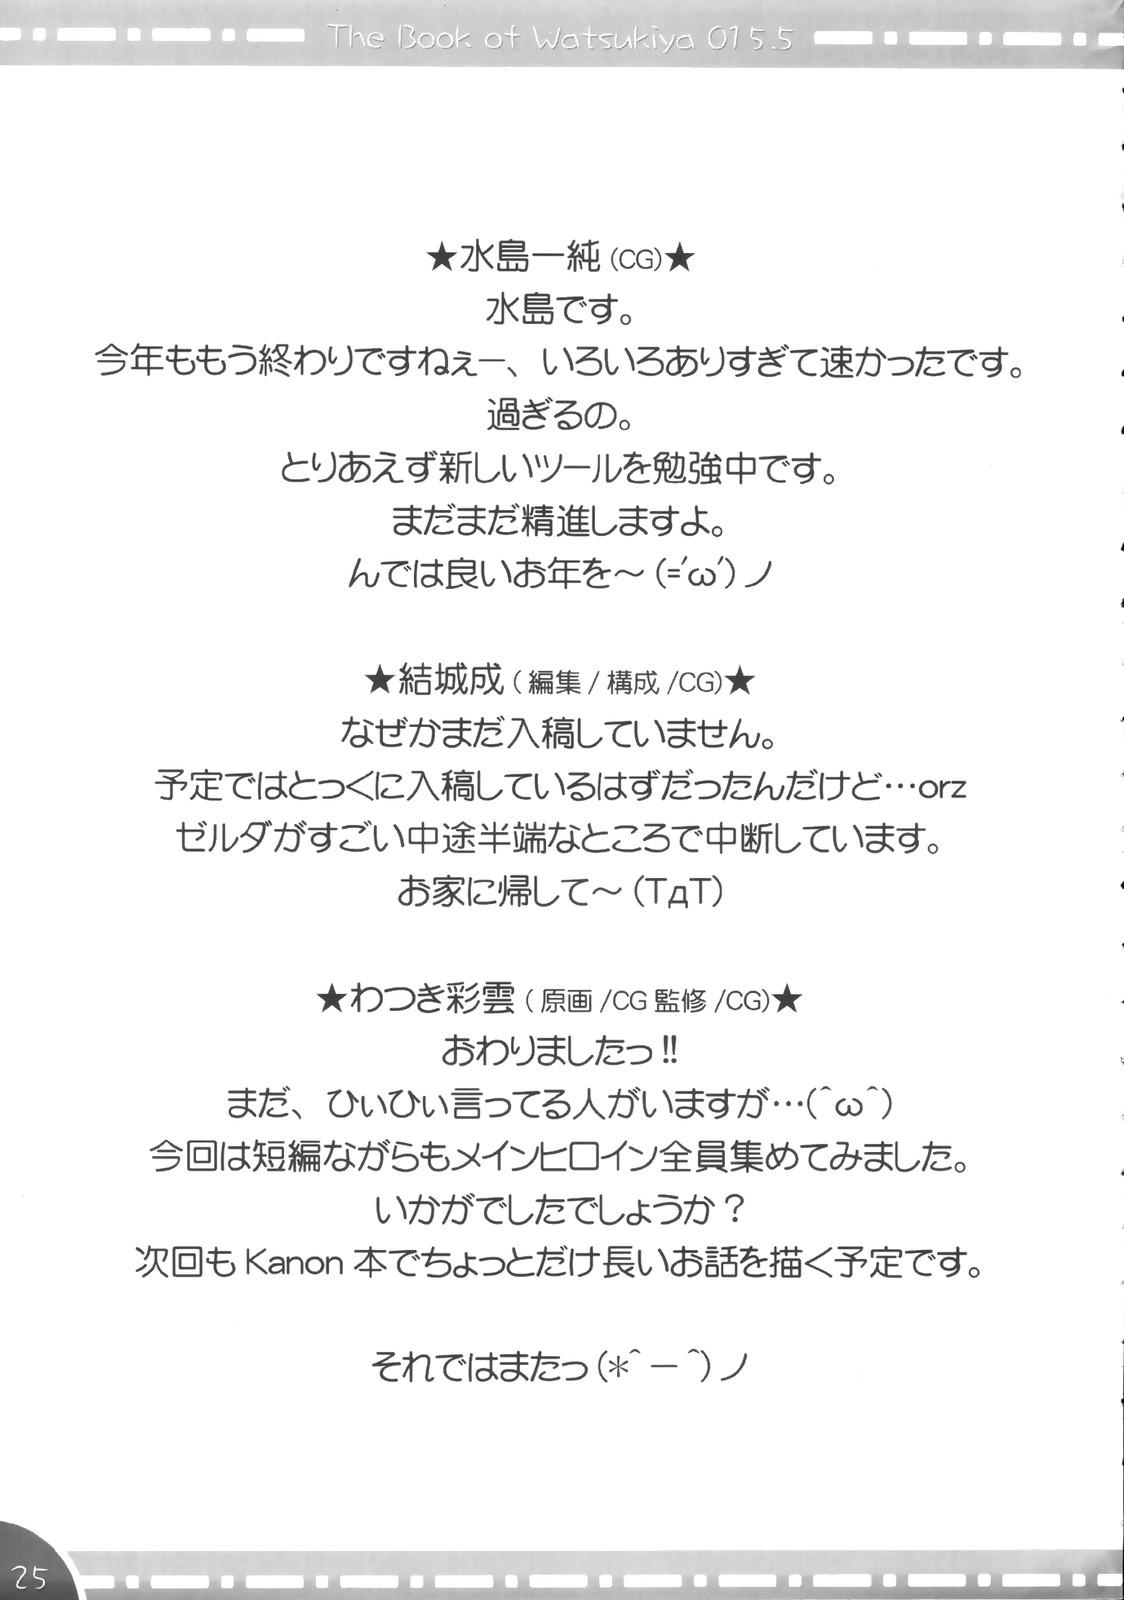 Step Dad - The Book of Watsukiya 015.5 - Kanon Dominate - Page 24